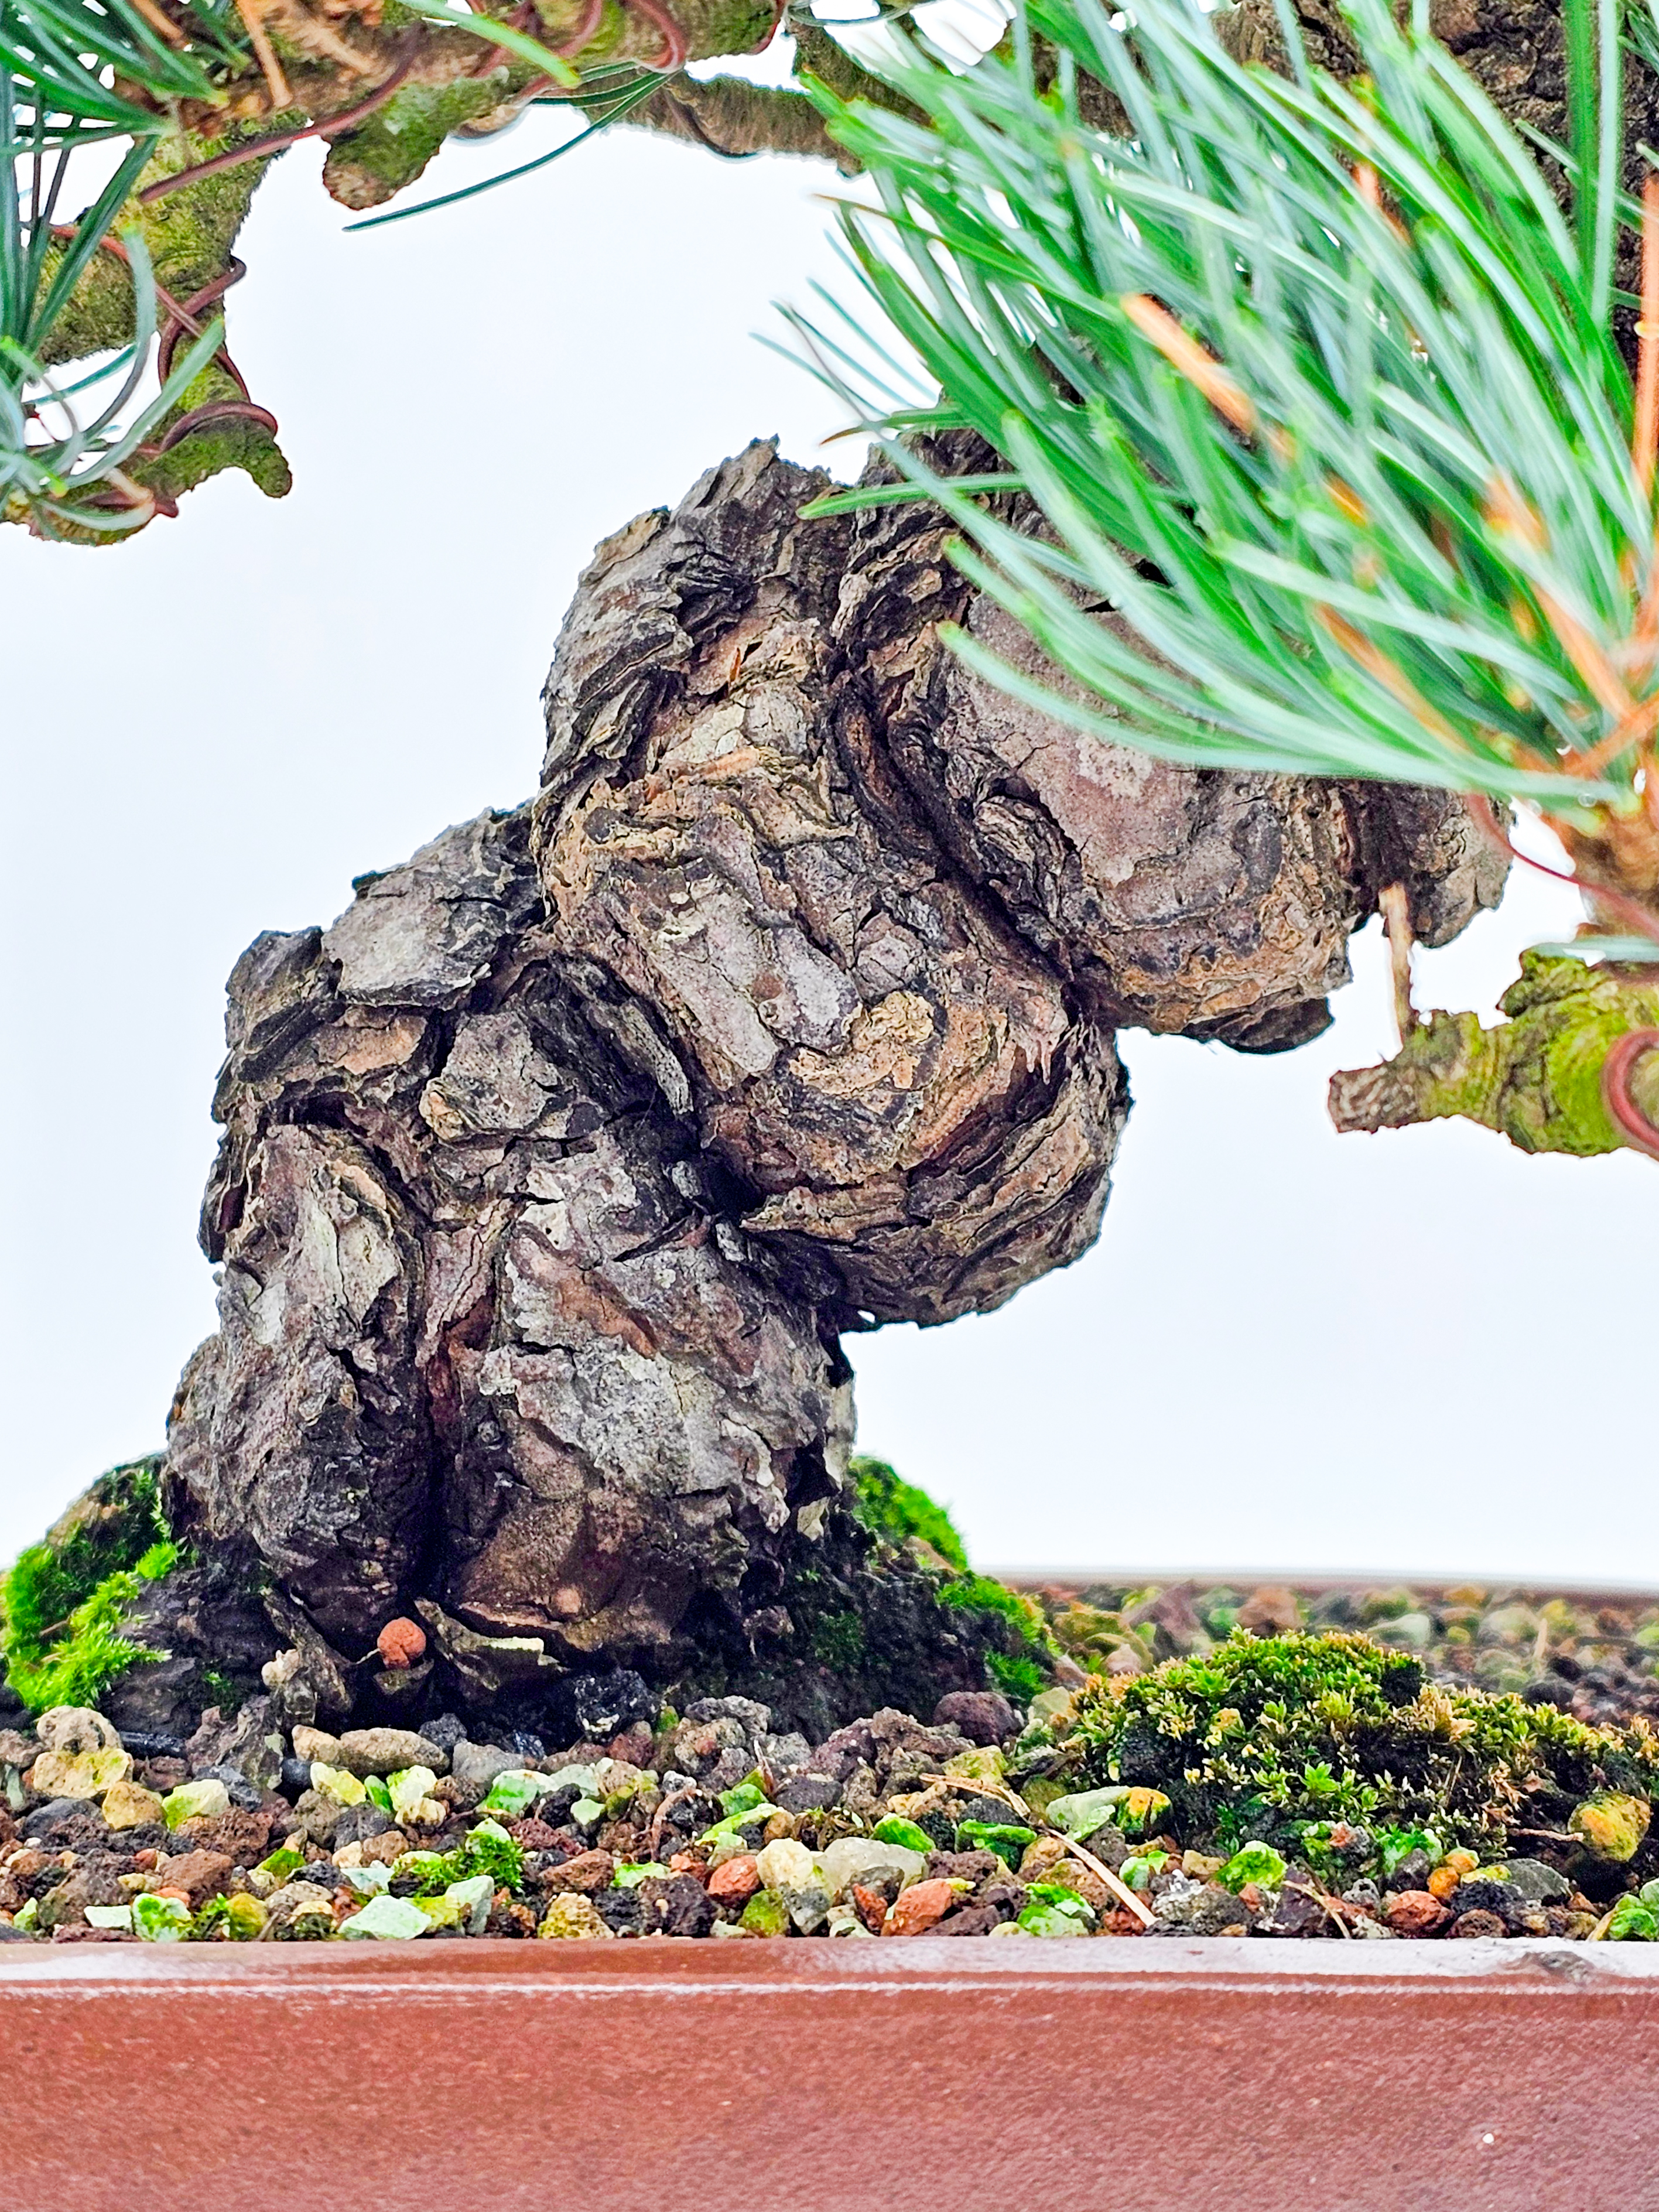 Bonsai Pinus parviflora Mädchenkiefer 27cm